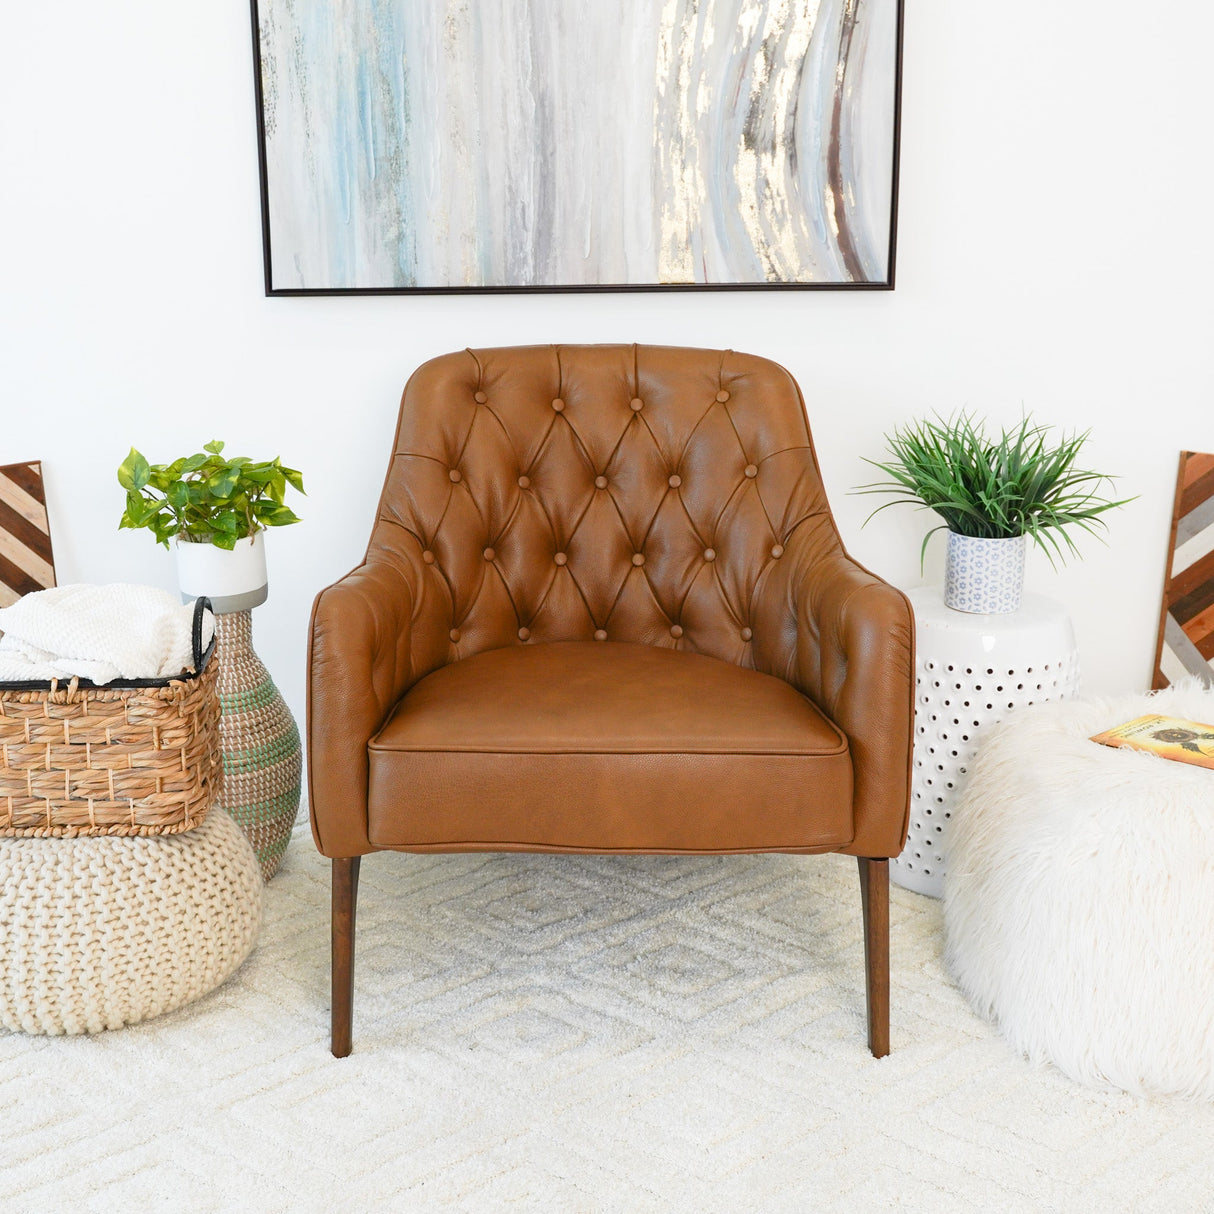 Joshua Mid-Century Modern Tufted Tan Leather Lounge Chair - AFC00406 - Luna Furniture